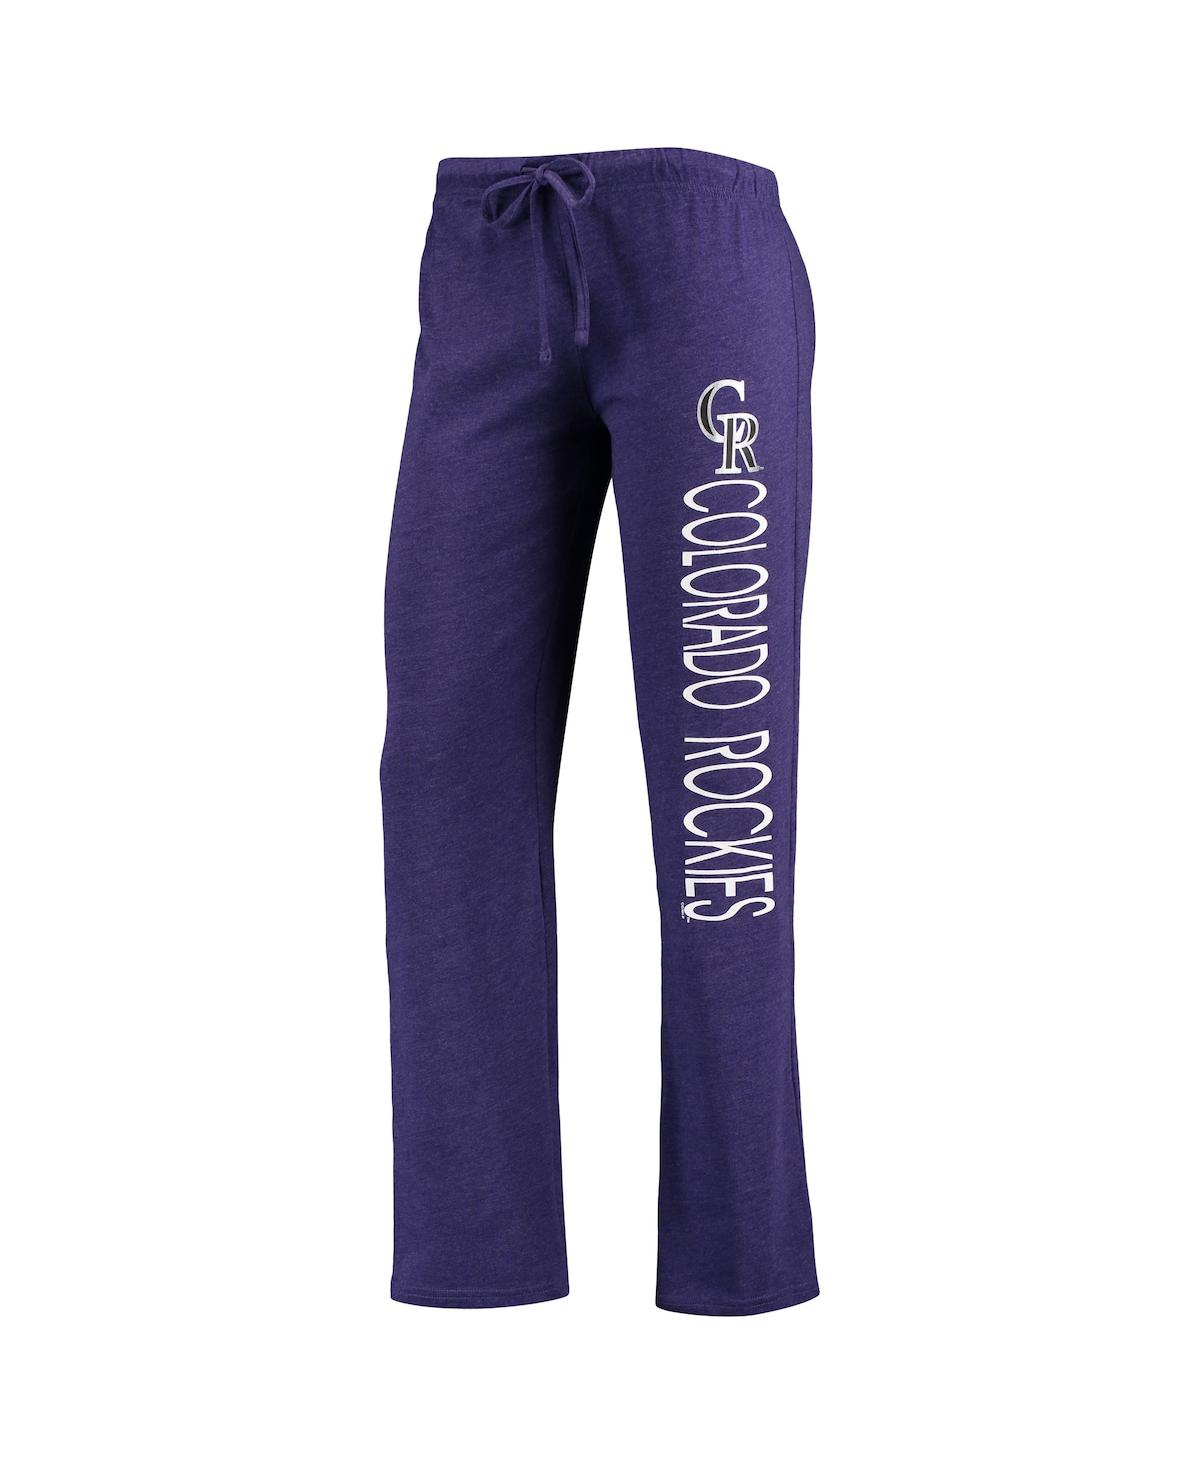 Concepts Sport Purple/Black Colorado Rockies Badge T-Shirt & Pants Sleep Set